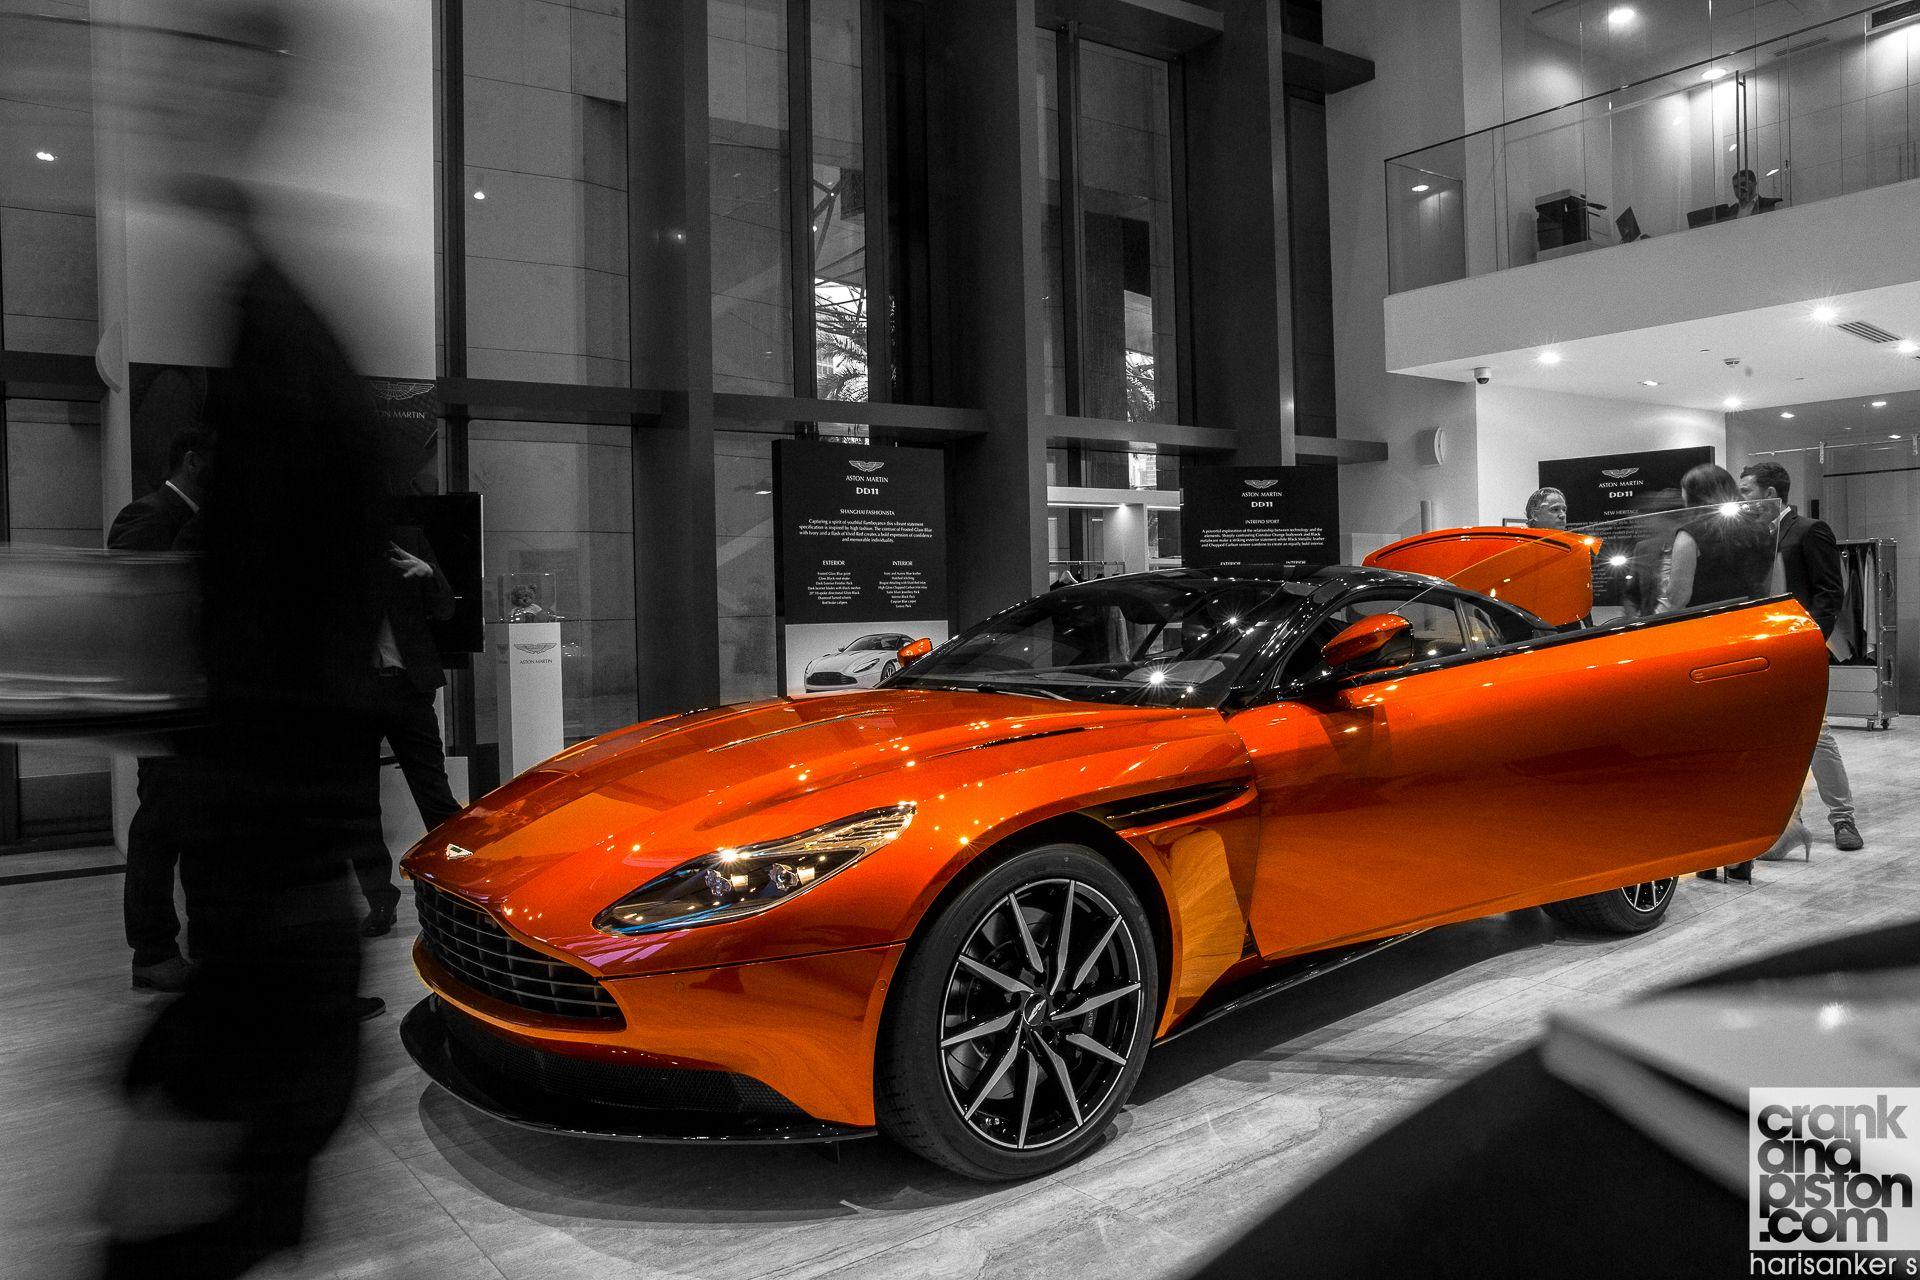 Aston Martin DB11 unveiled. Dubai, UAE